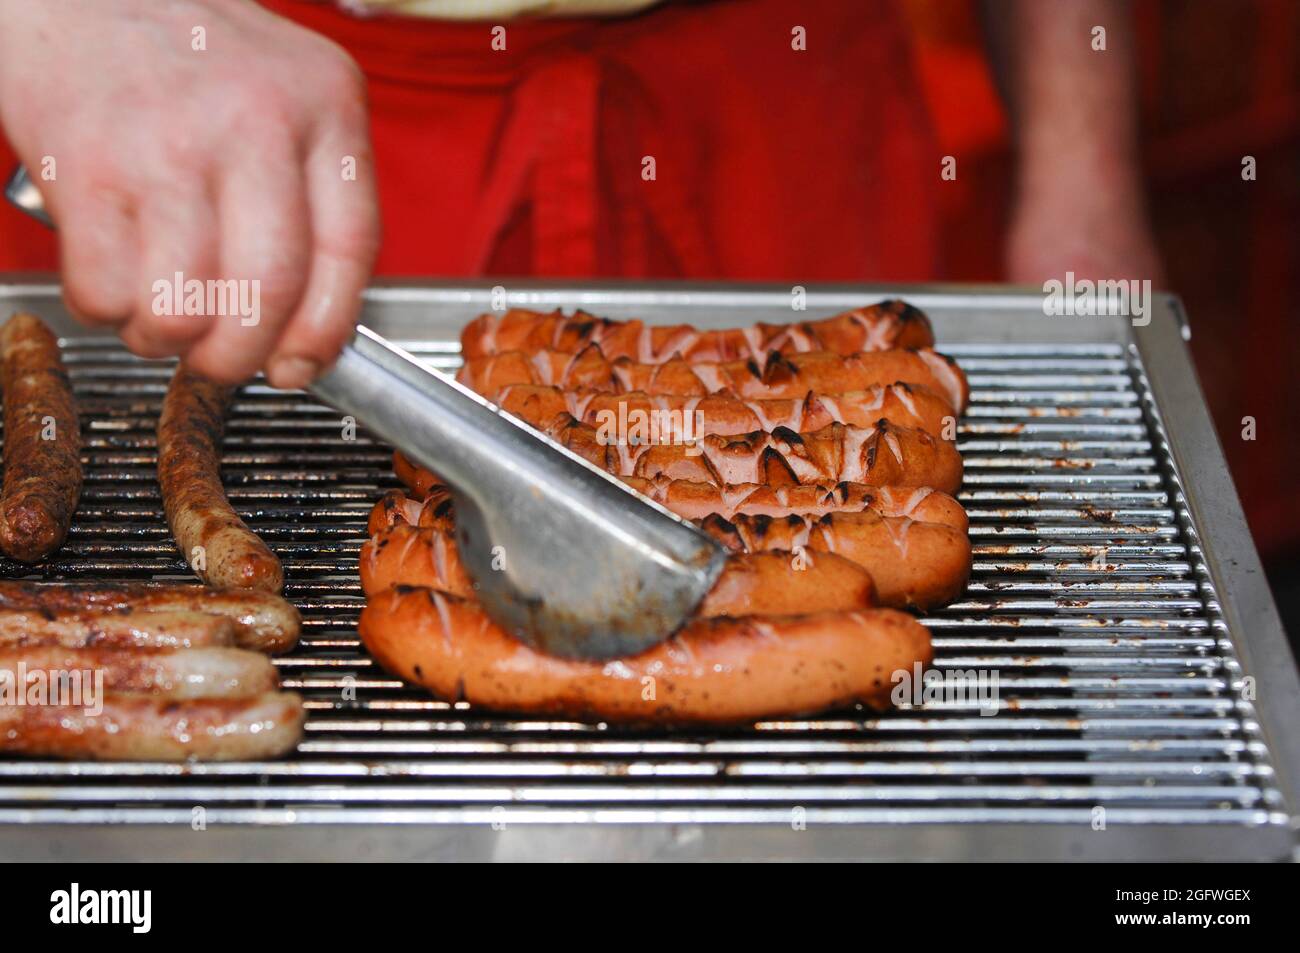 bratwurst on a gas grill Stock Photo